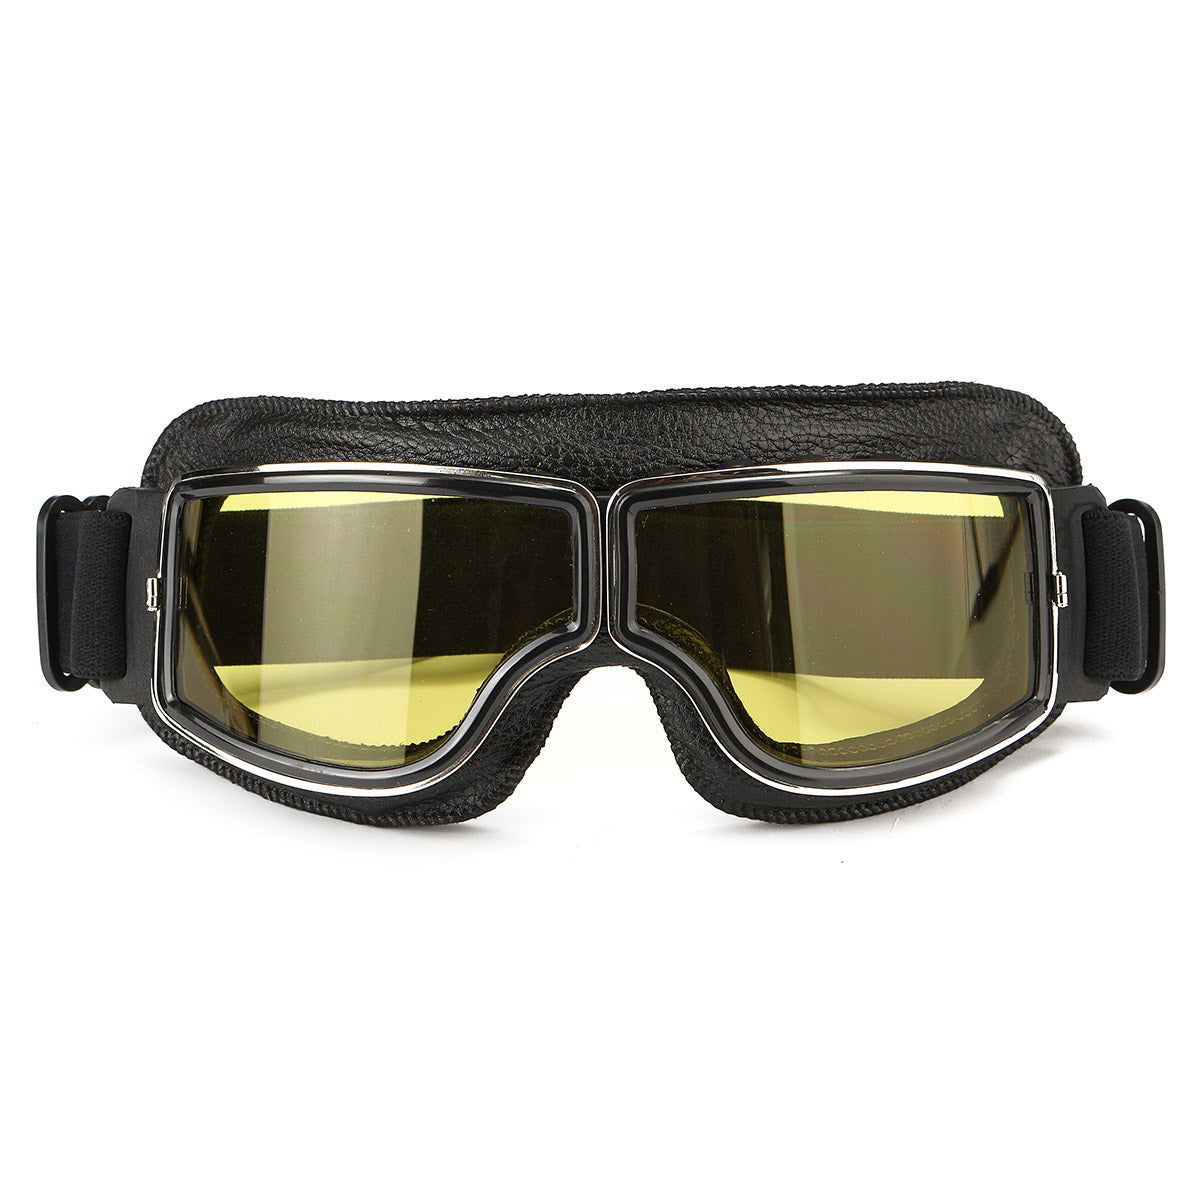 Dim Gray Helmet Leather Goggles Anti-UV Protective Glasses Eyewear Motorcycle Bike Scooter